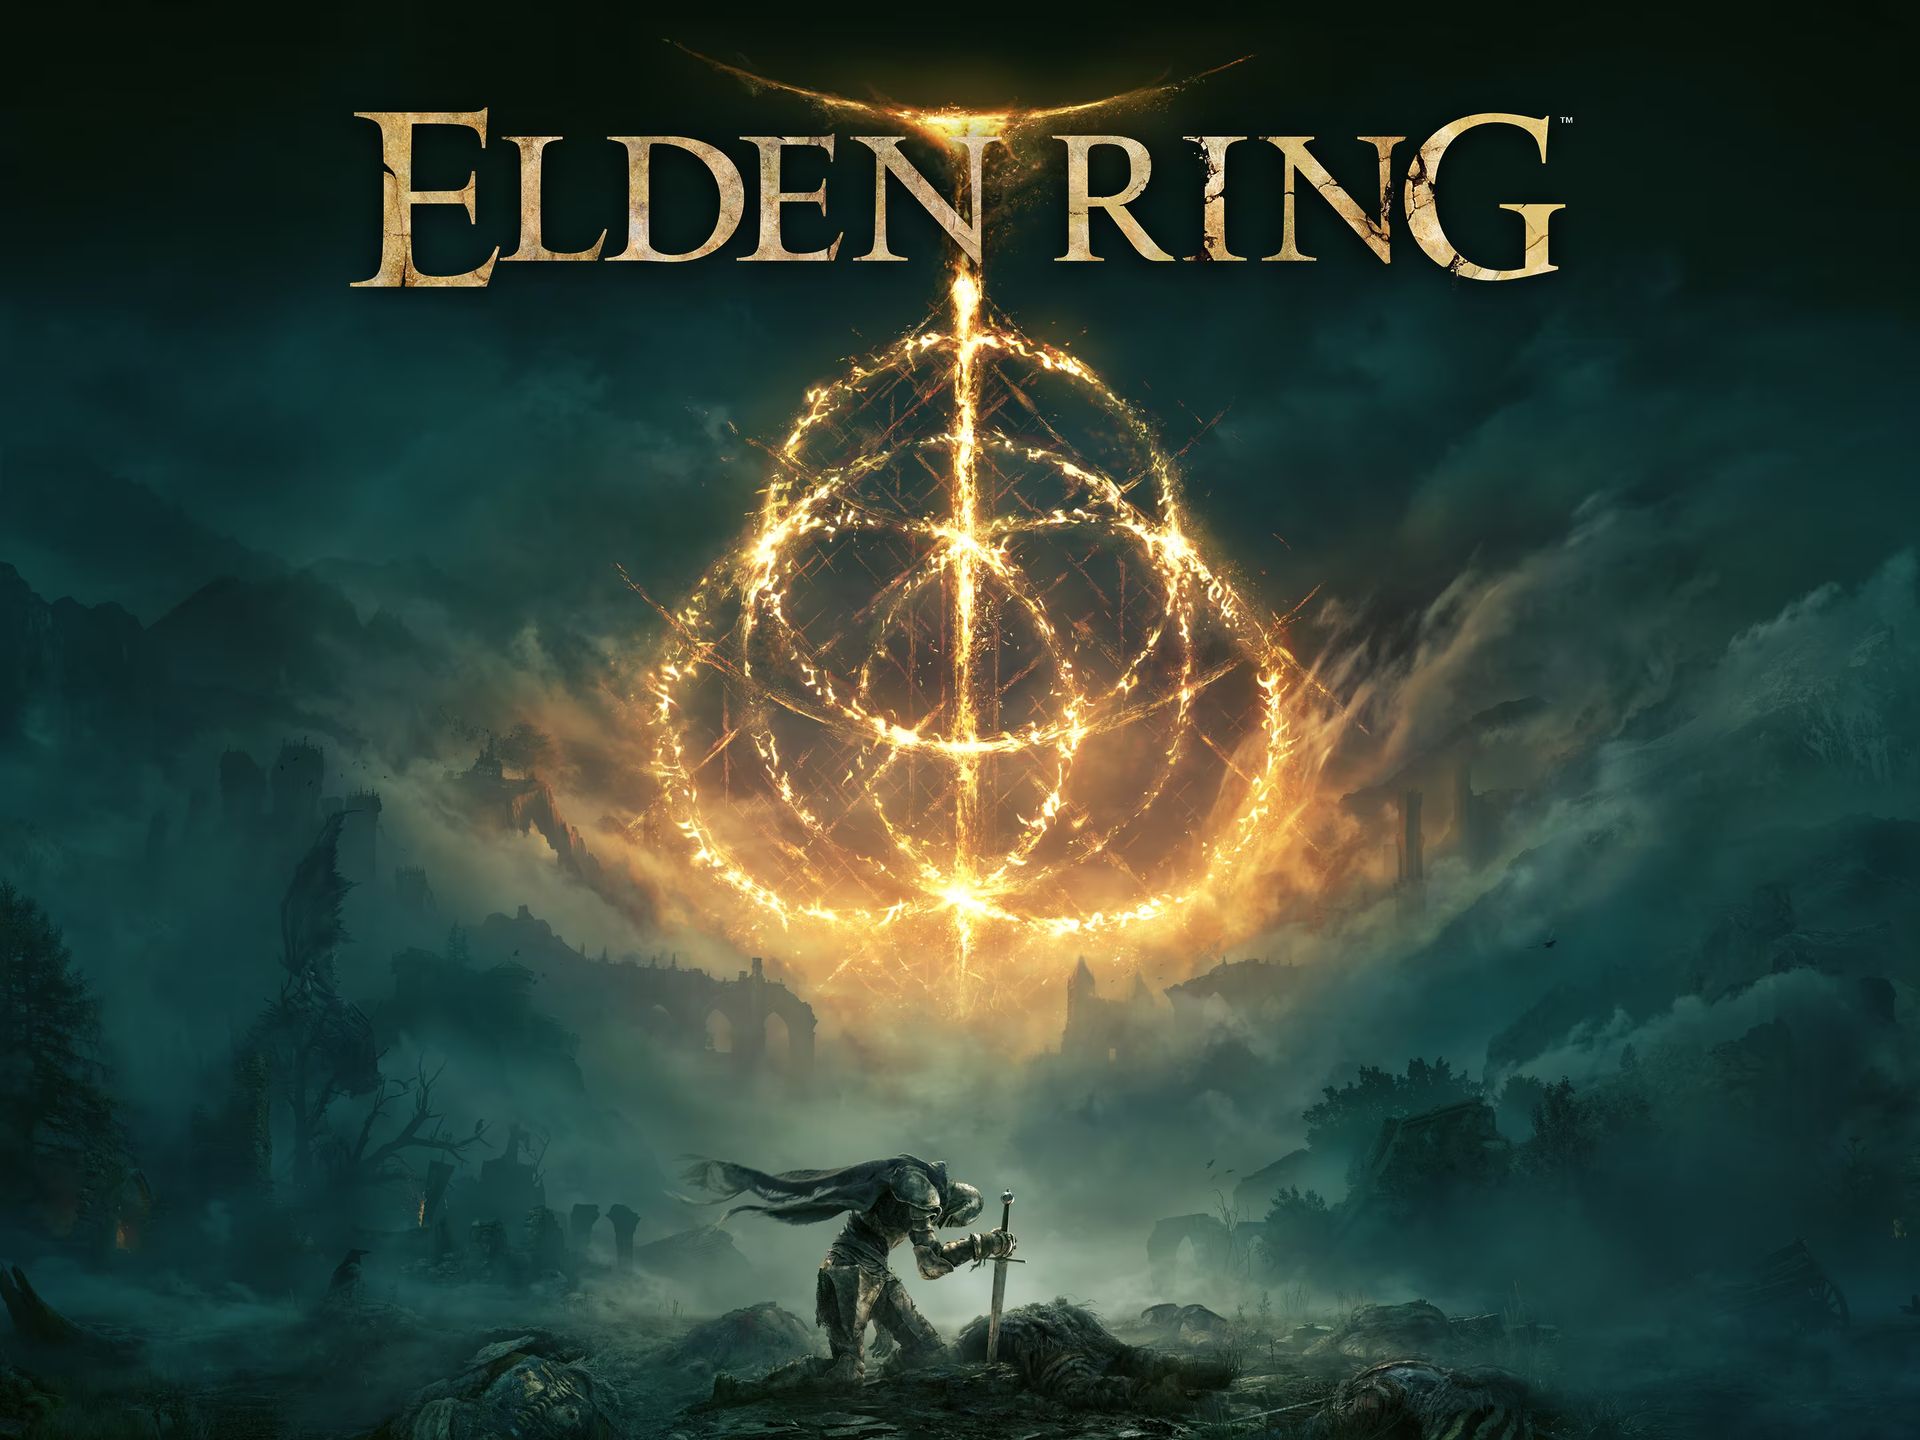 Towards to epic journey: Elden Ring story progression